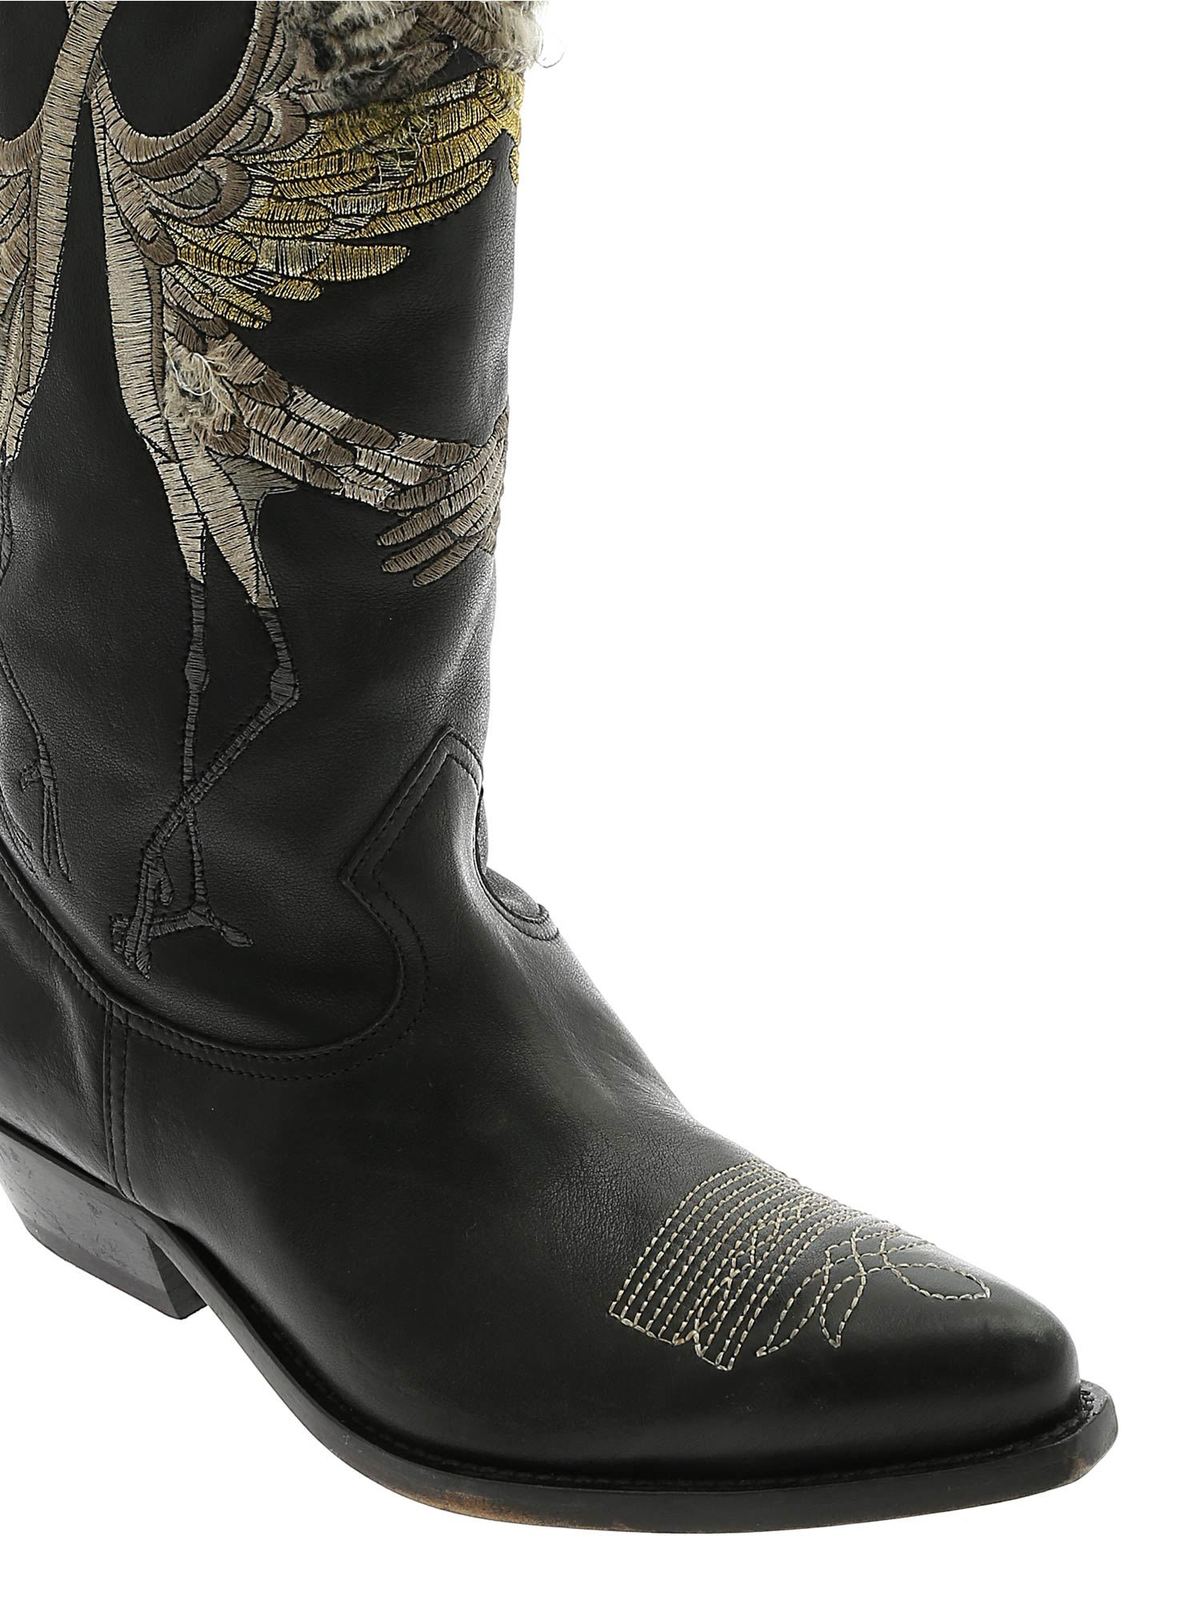 Golden Goose - Wish Star texan boots in 